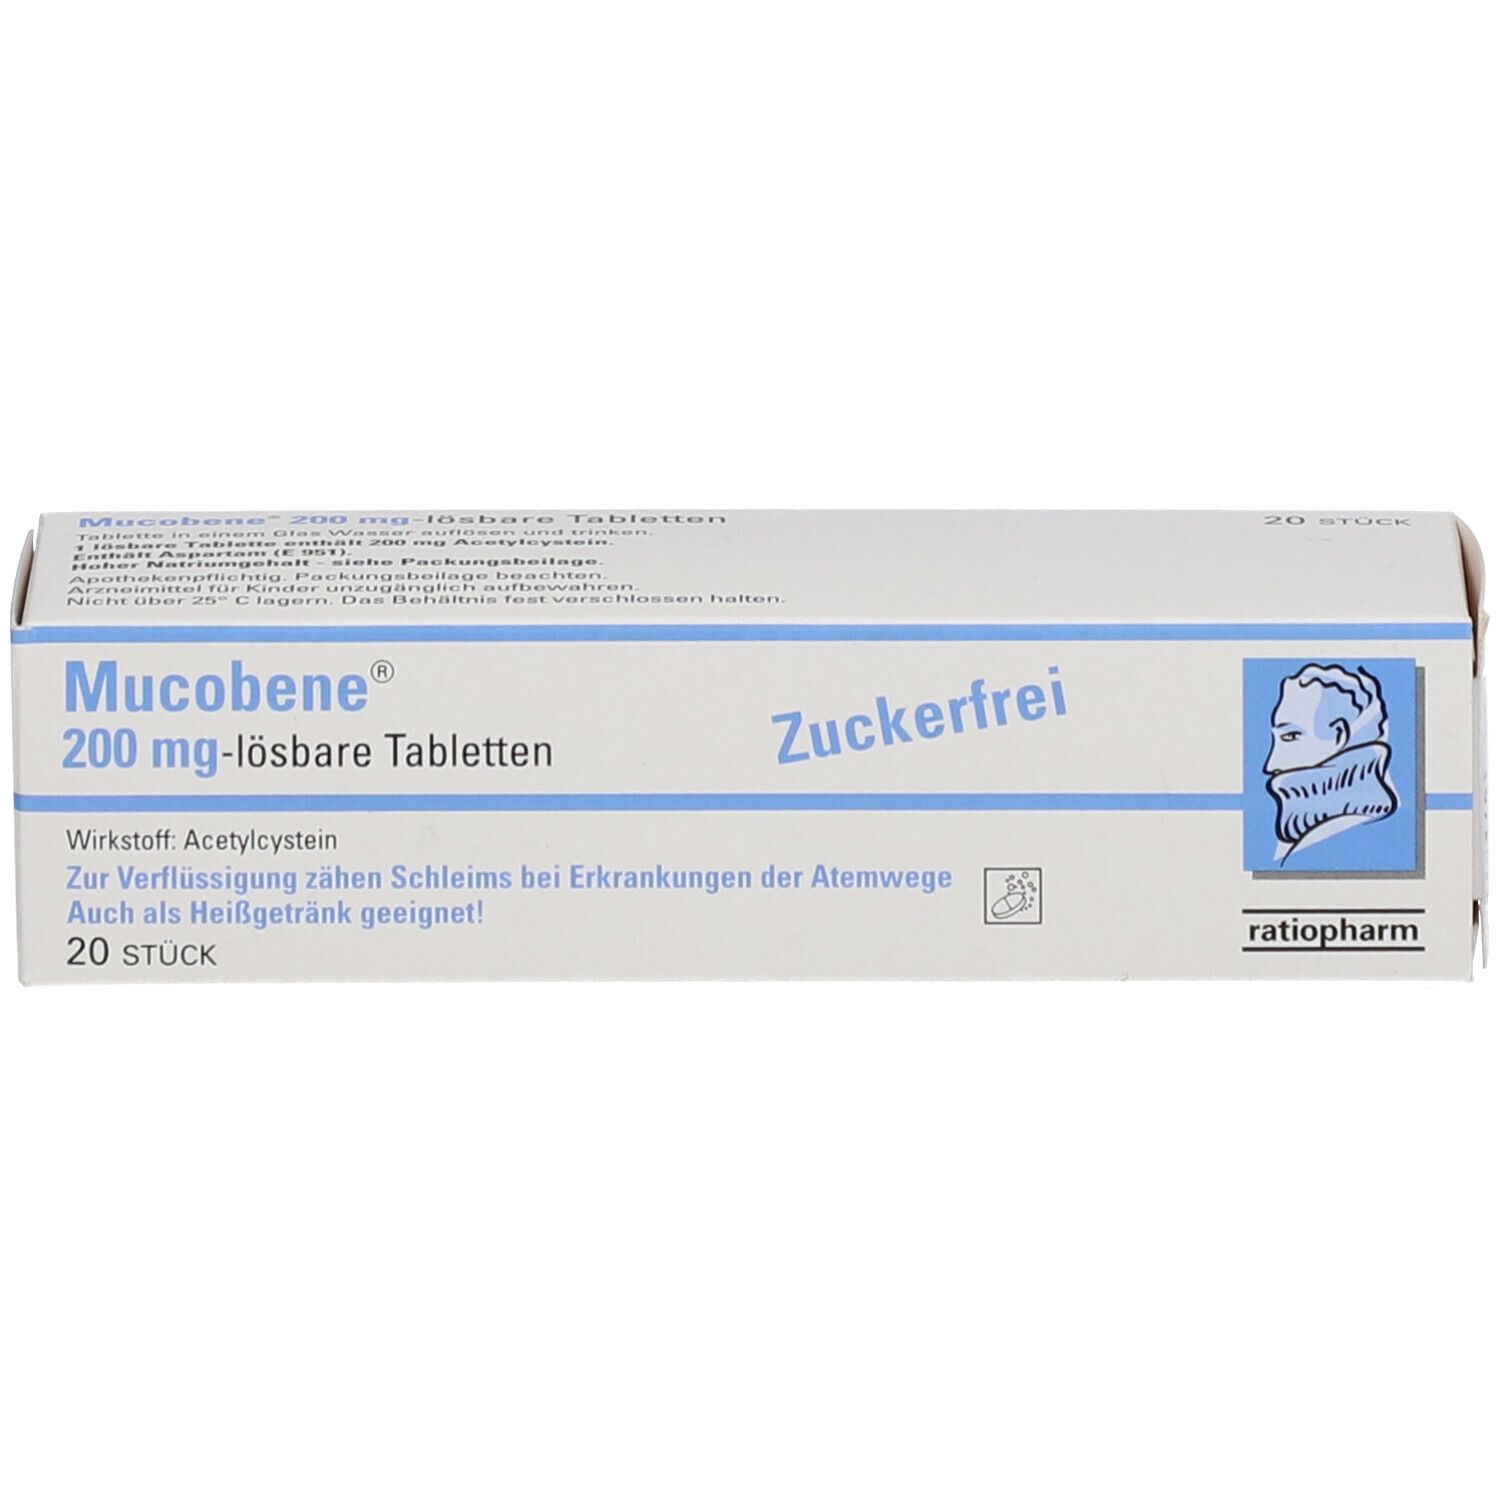 Mucobene® 200 mg lösbare Tabletten